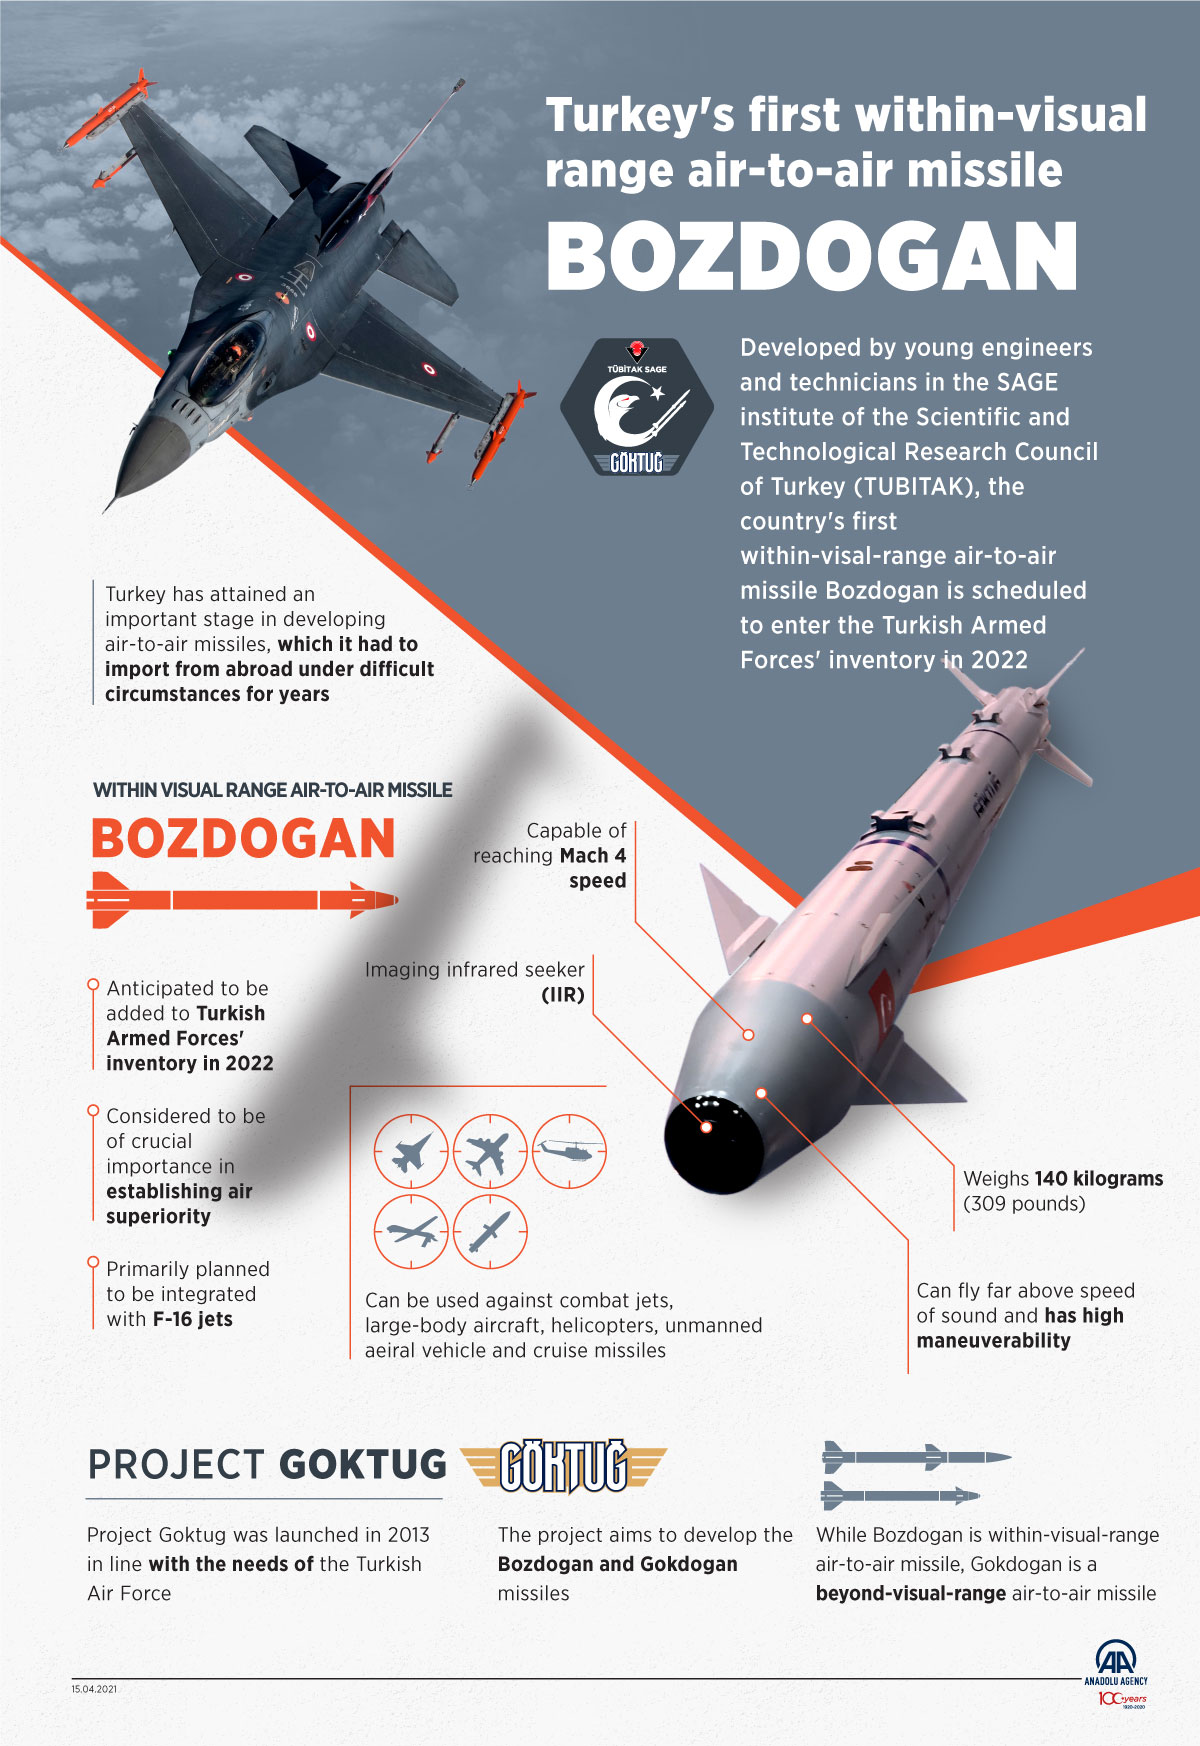 Turkey's first within-visual-range air-to-air missile : Bozdogan